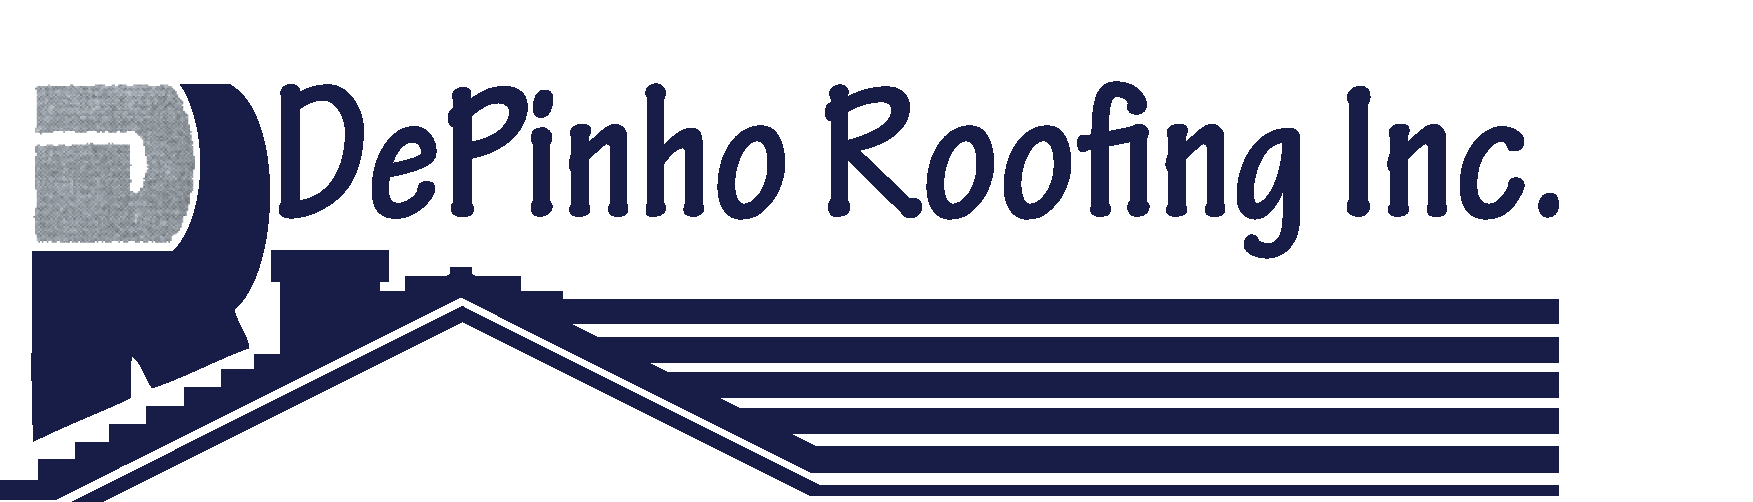 DePinho Roofing logo